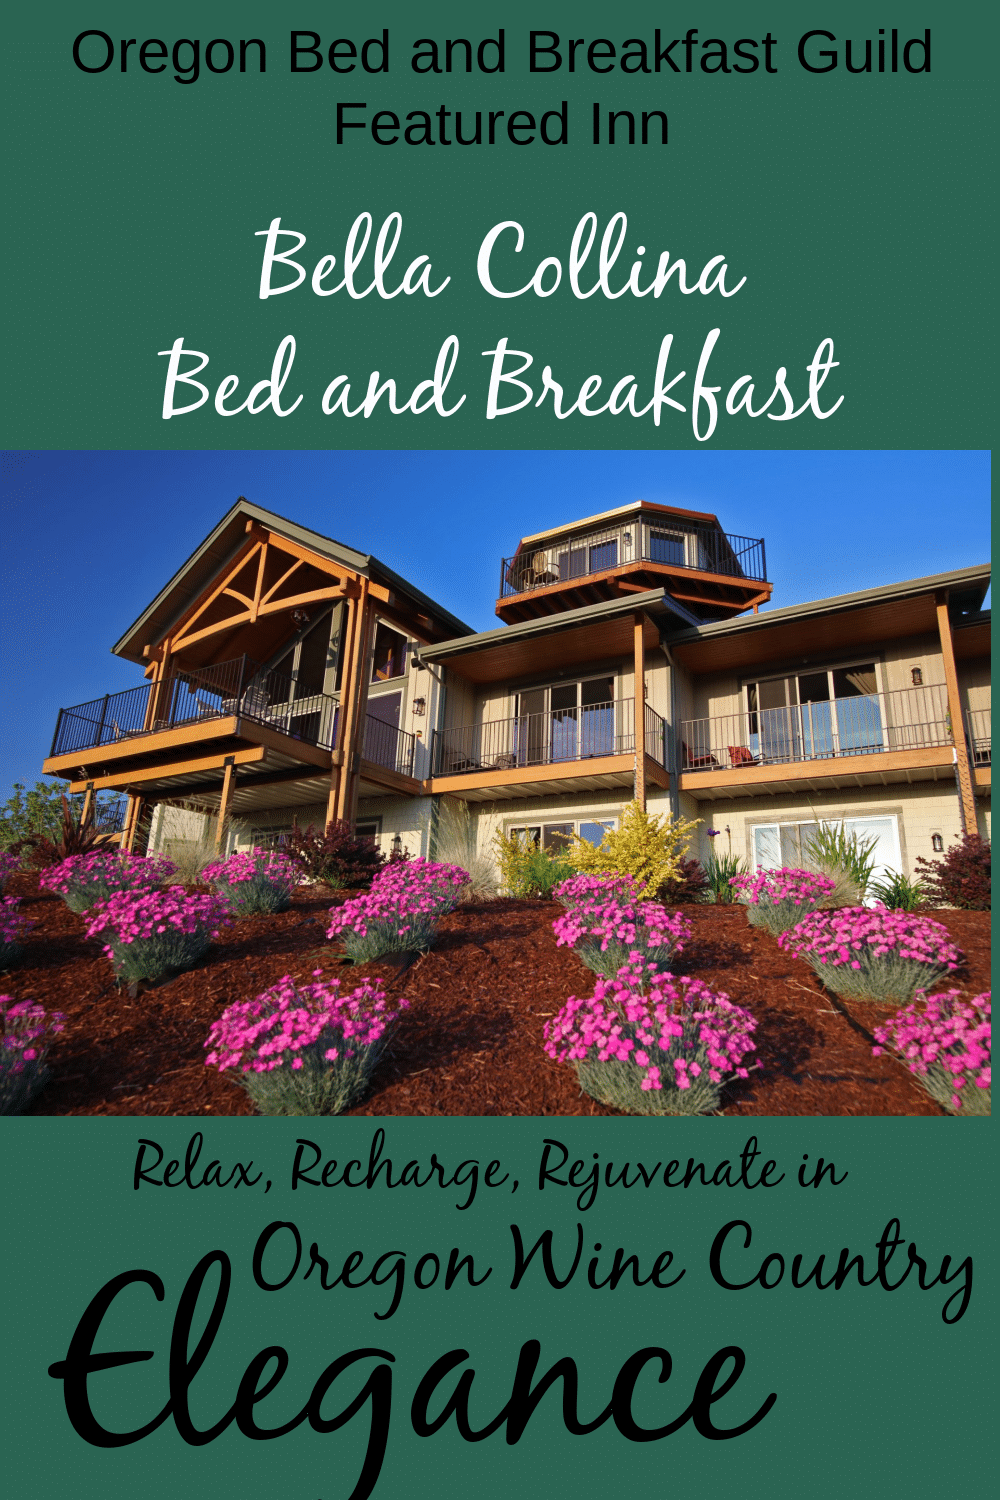 Bella Collina Bed and Breakfast pinterest pin on dark green